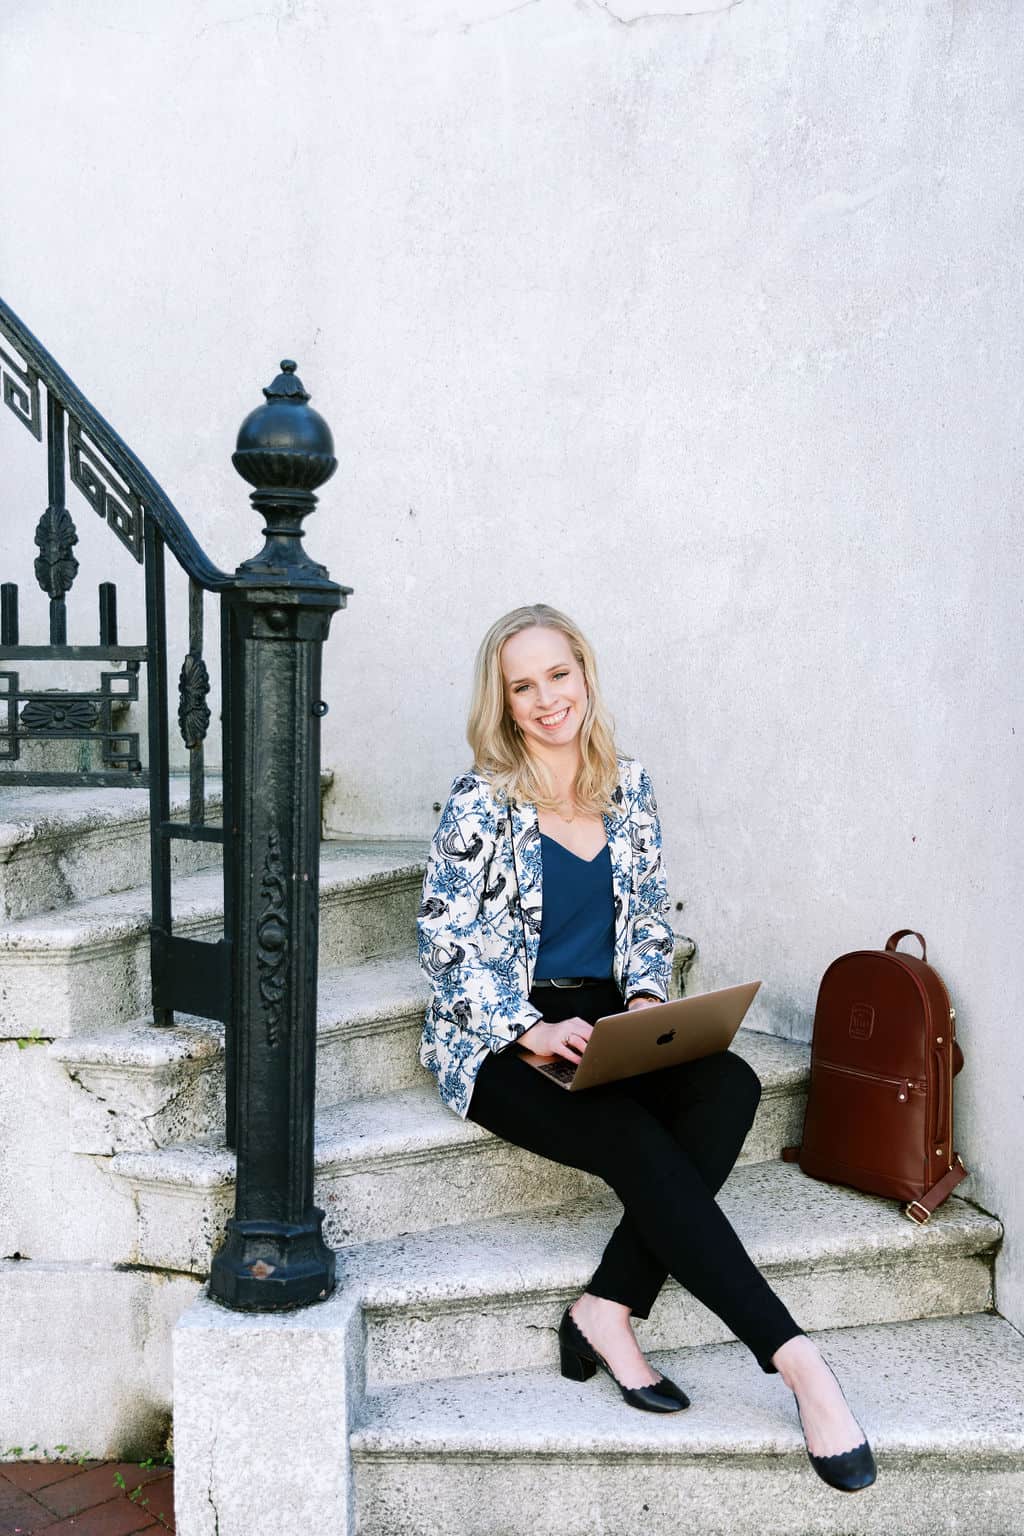 Digital Grace Design founder, Sarah Blodgett, sits on some steps with her laptop